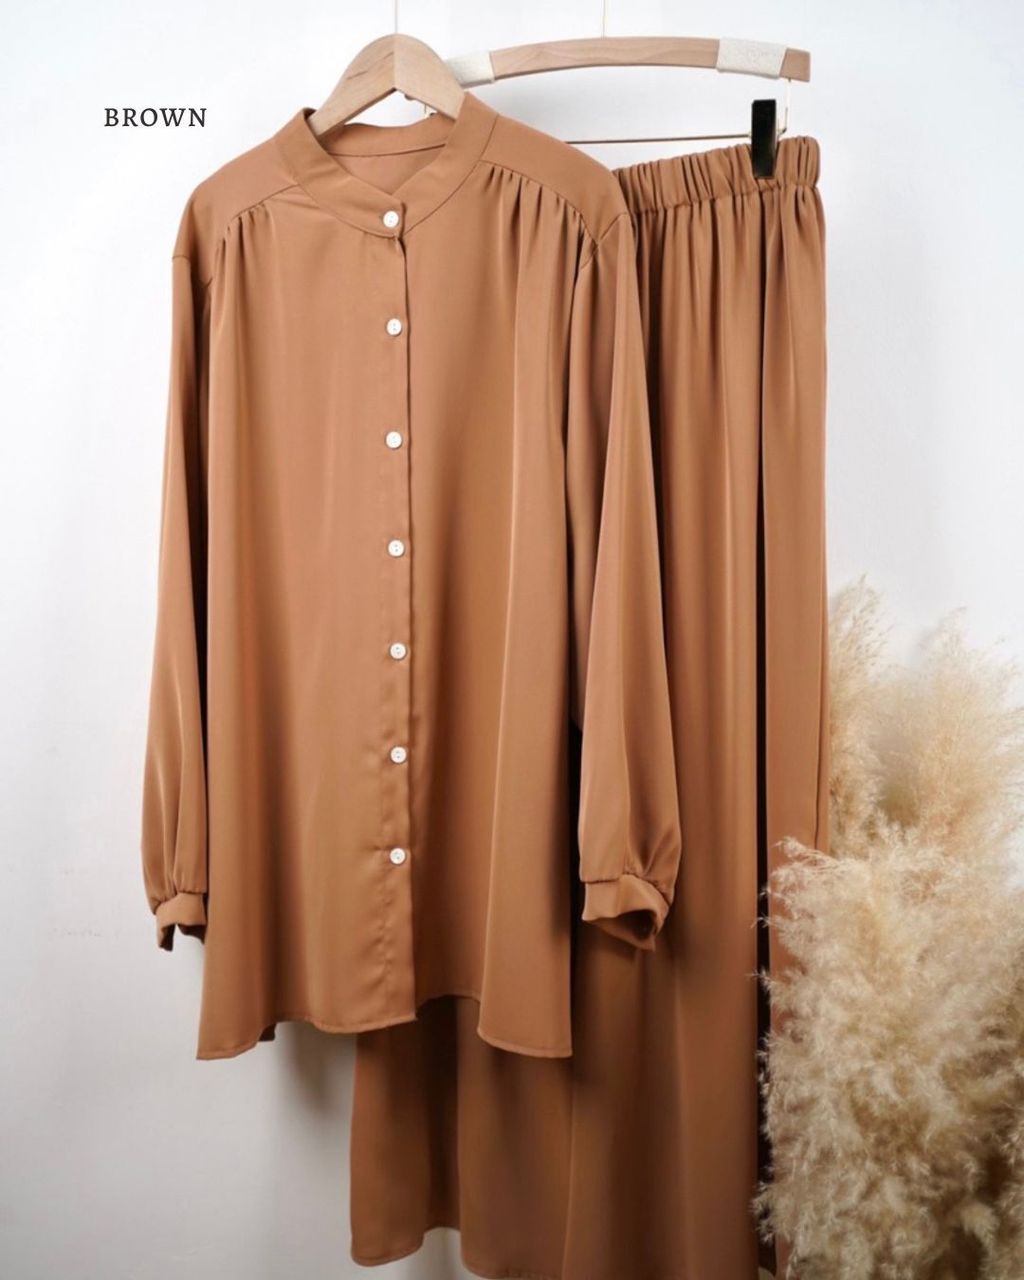 haura-wear-cotton-baju-muslimah-set-seluar-suit-muslimah-set-baju-dan-seluar-muslimah-palazzo